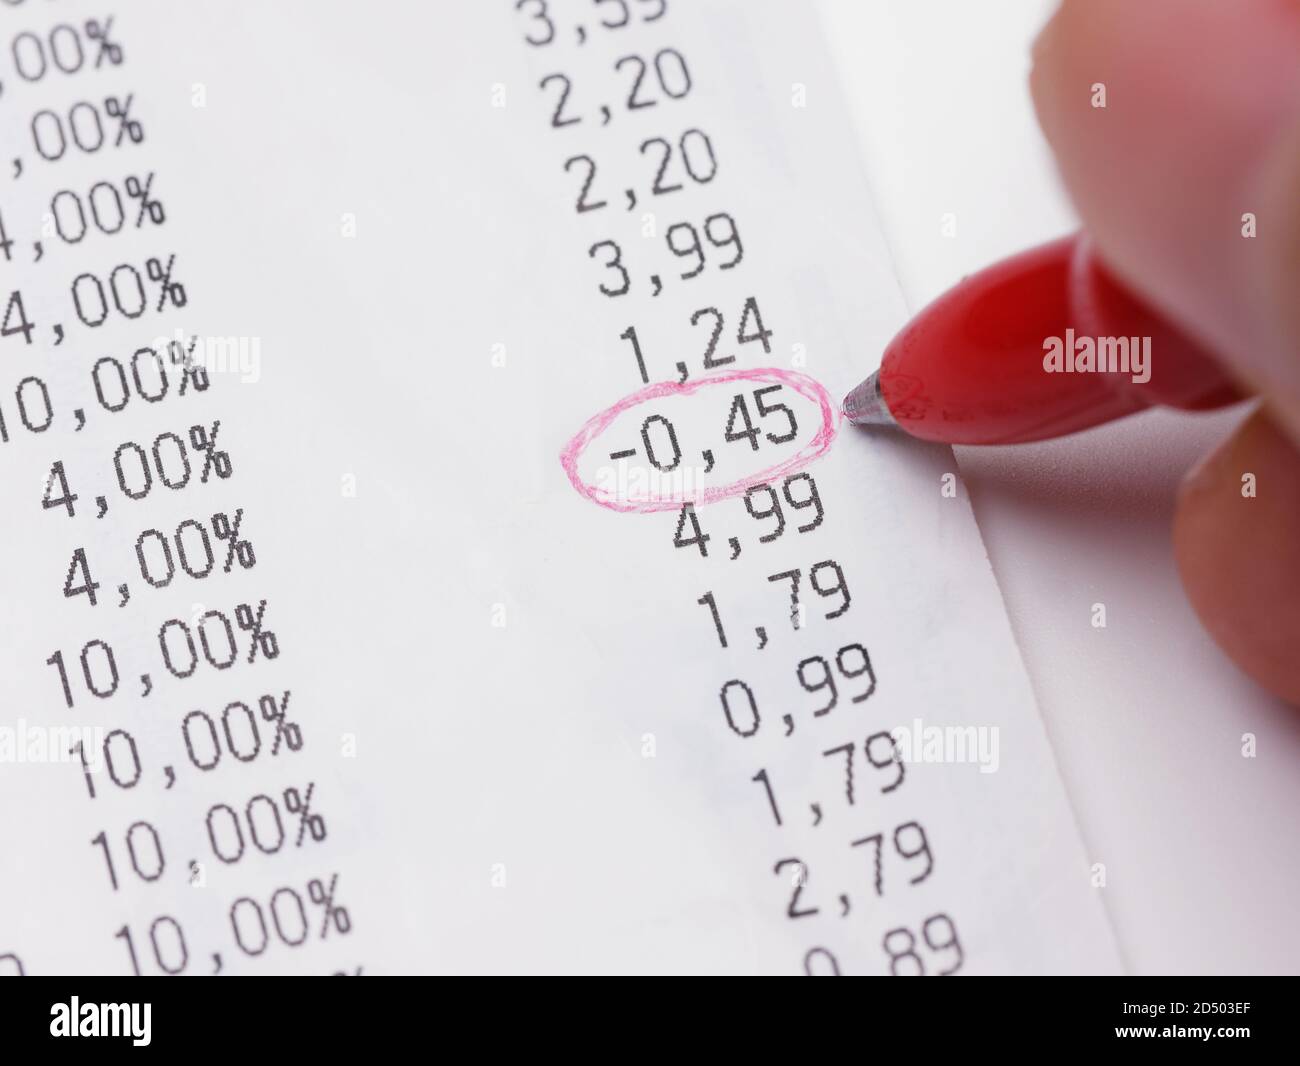 Closeup check shopping bill Receipt red pen encircle negative number Stock Photo